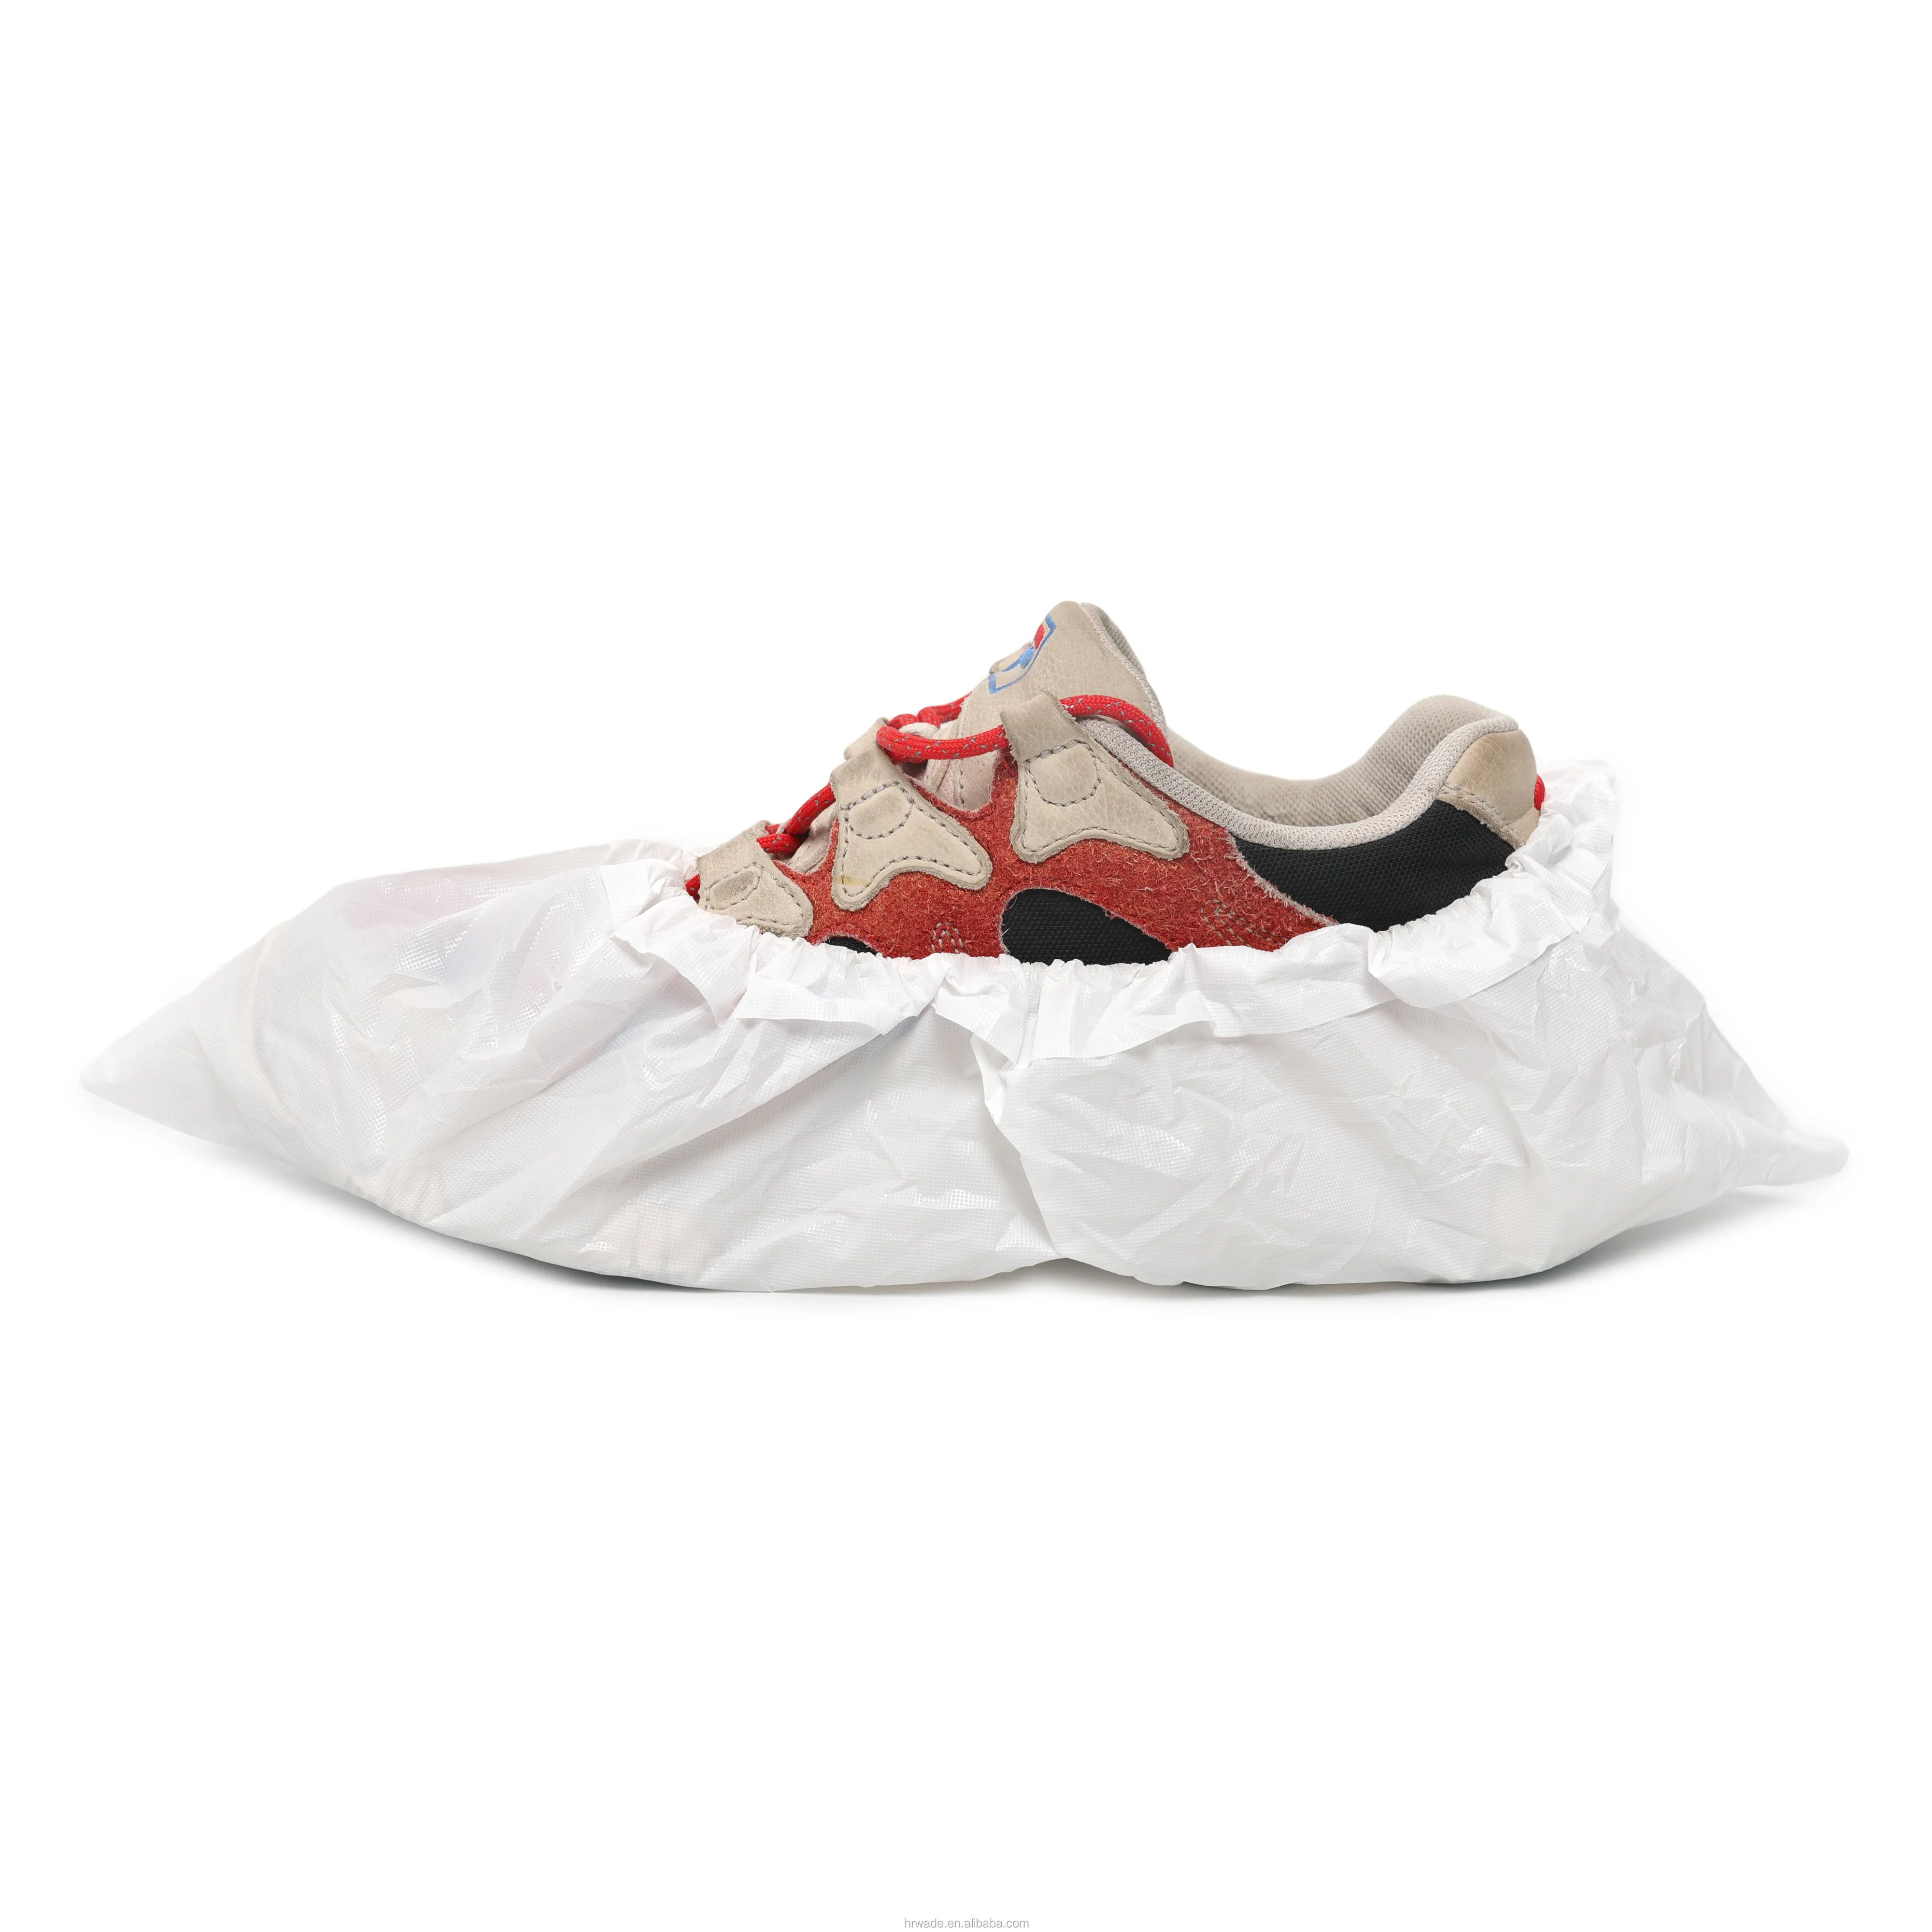 Professional Supplier disposable medical shoe covers pp pe film waterproof anti-slip boot covers OEM